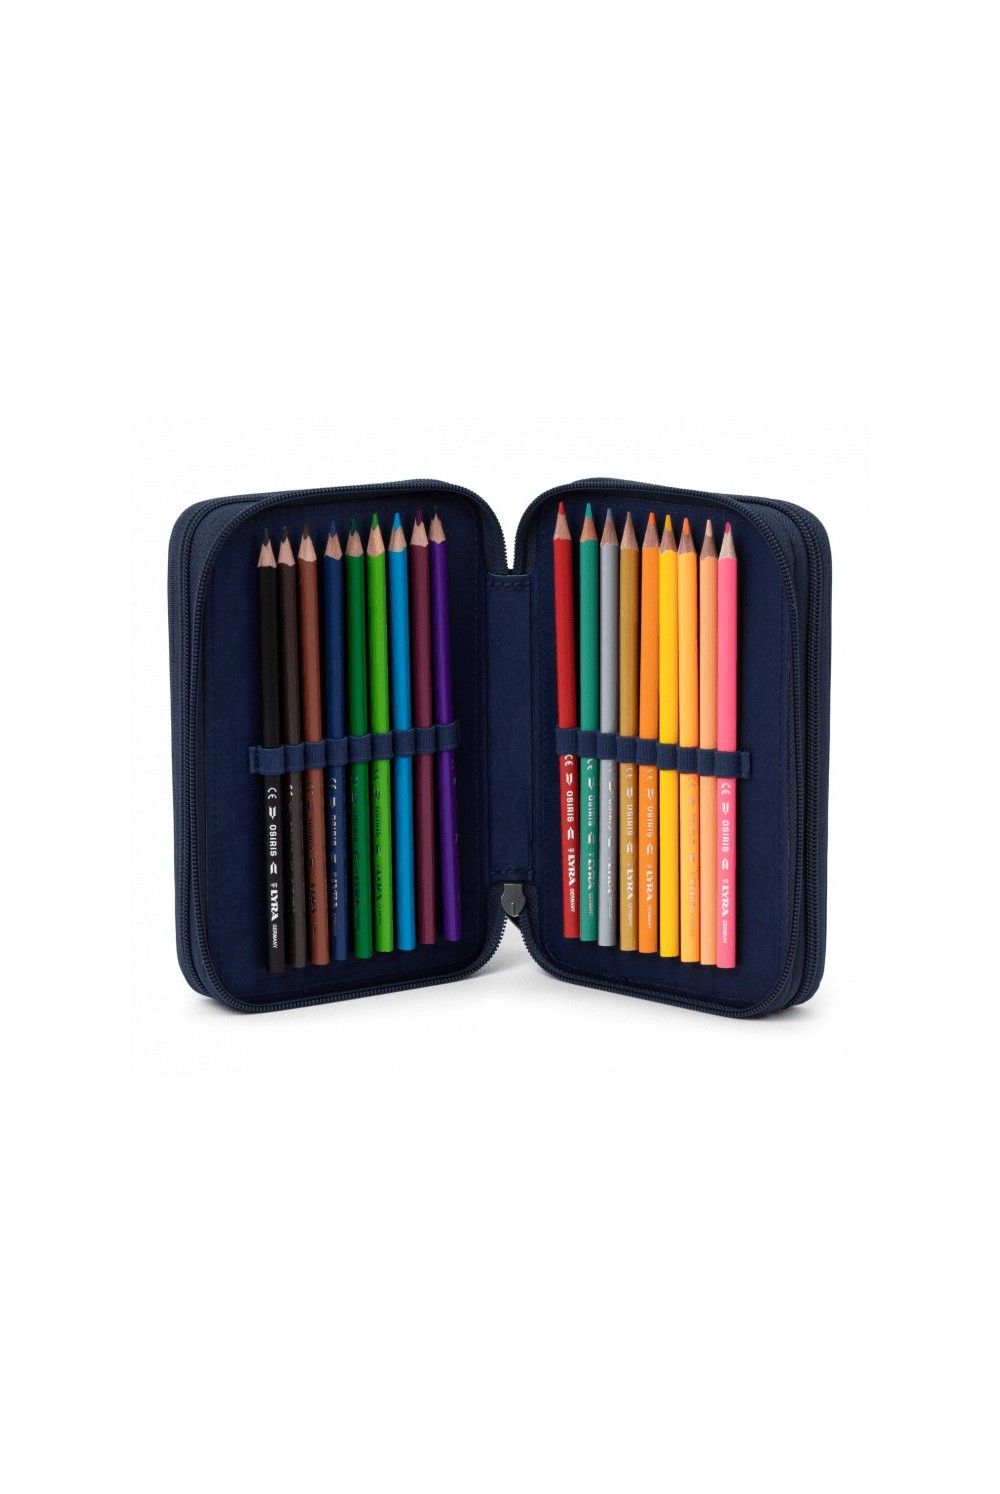 Ergobag maxi pencil case KuntBärbuntes Einhorn